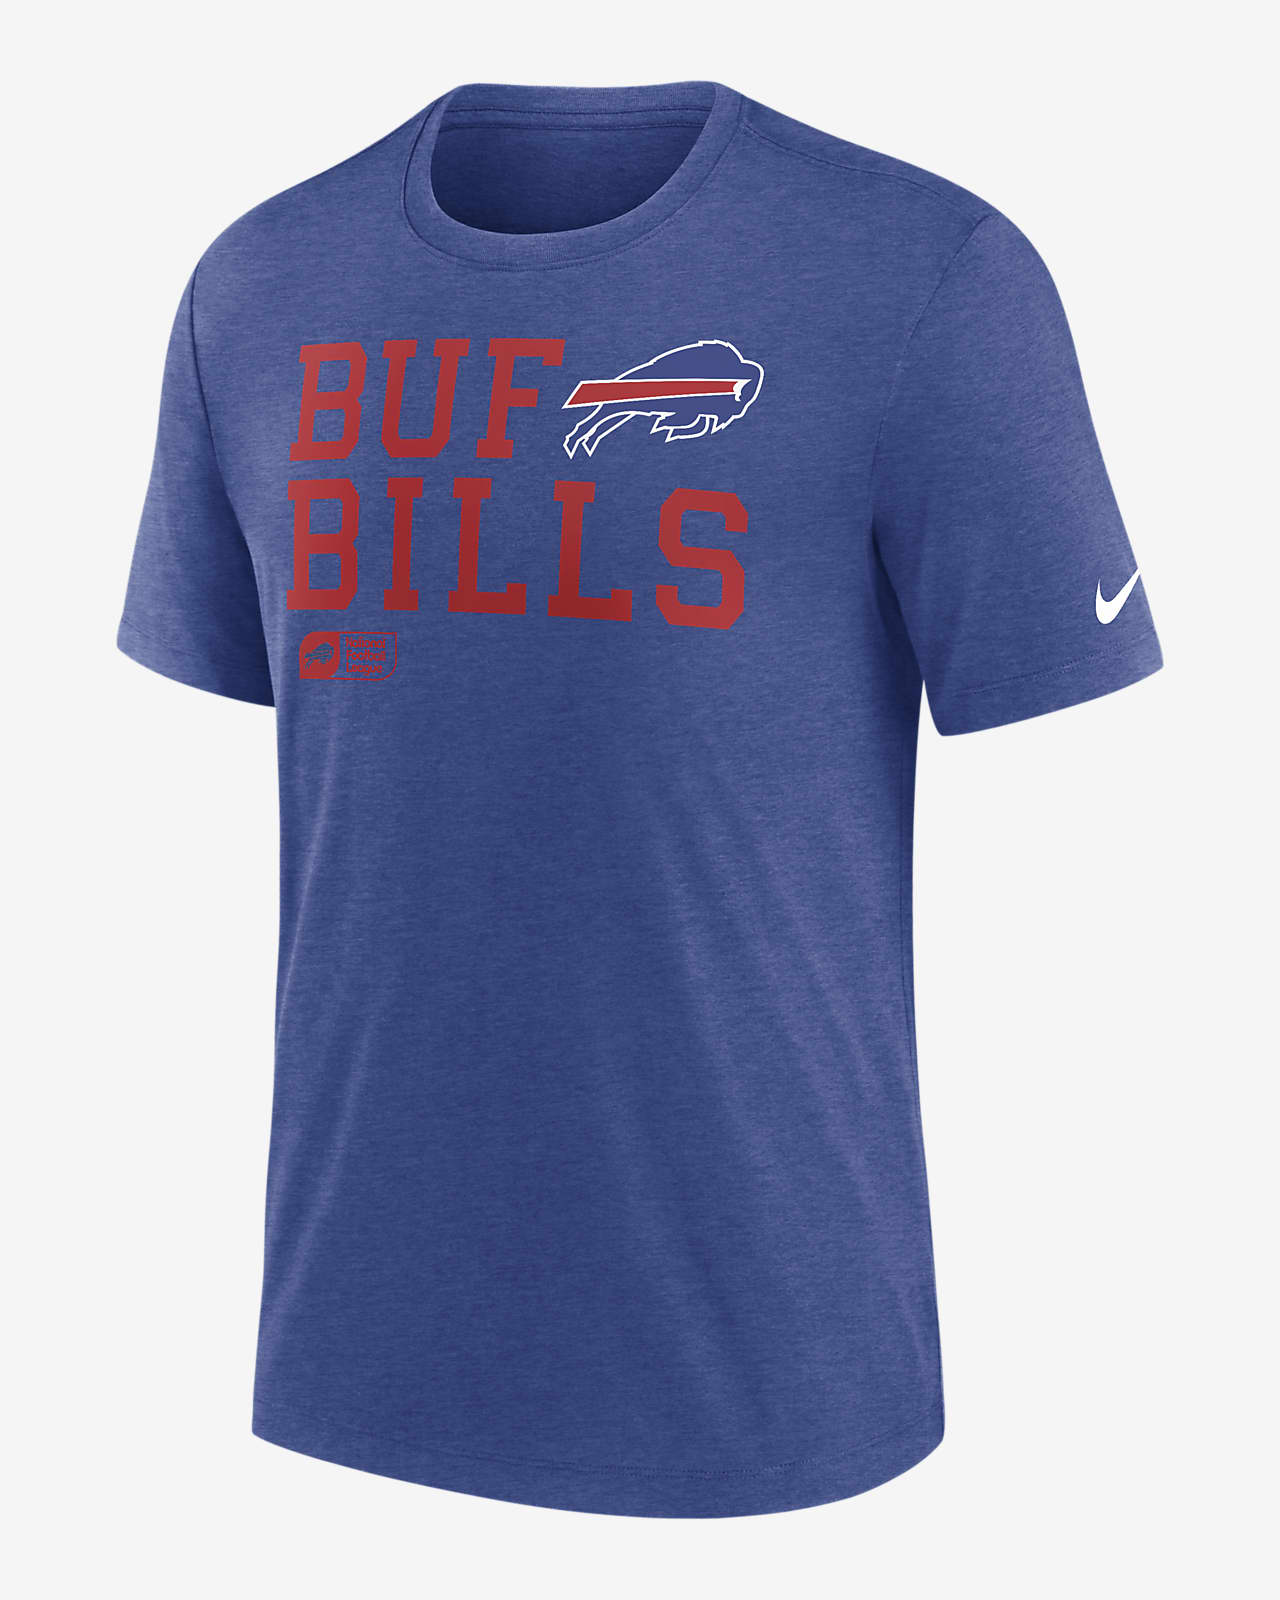 Playera Nike de la NFL para hombre Buffalo Bills Overlap Lockup